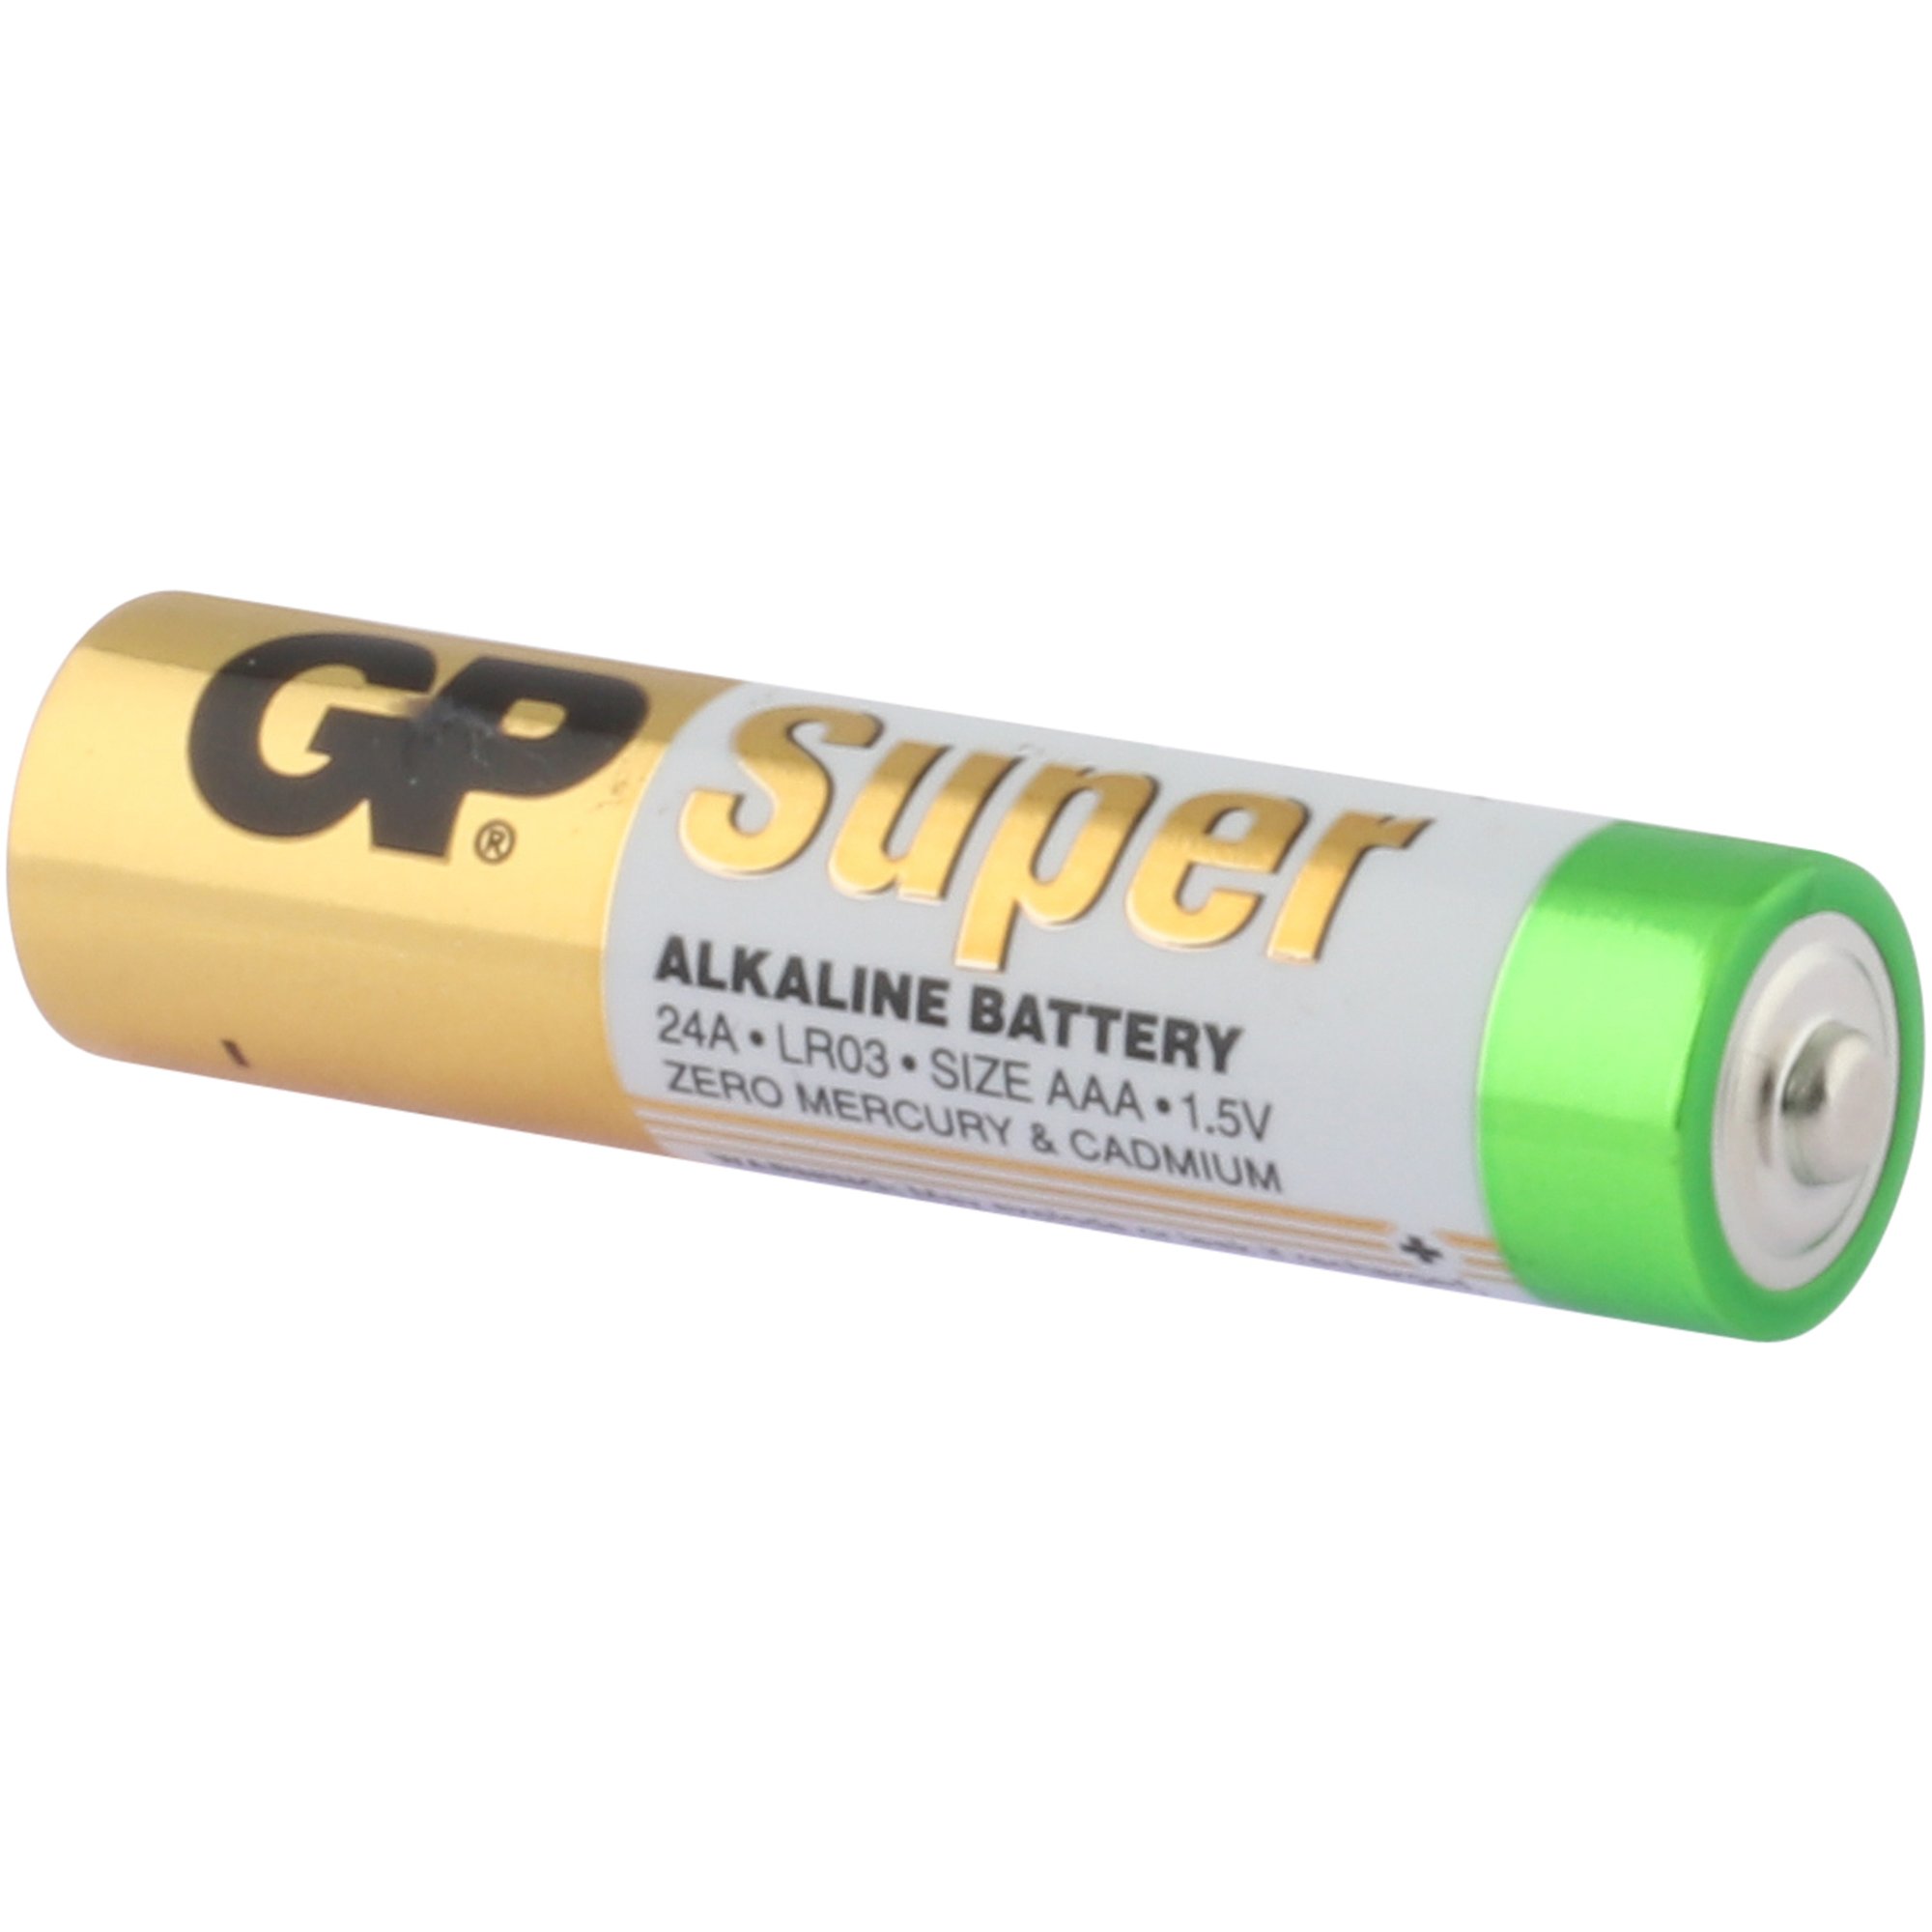 AAA Micro Batterie GP Alkaline Super 1,5V 12 Stück, AA Mignon Batterie GP Alkaline Super 1,5V 32 Stück